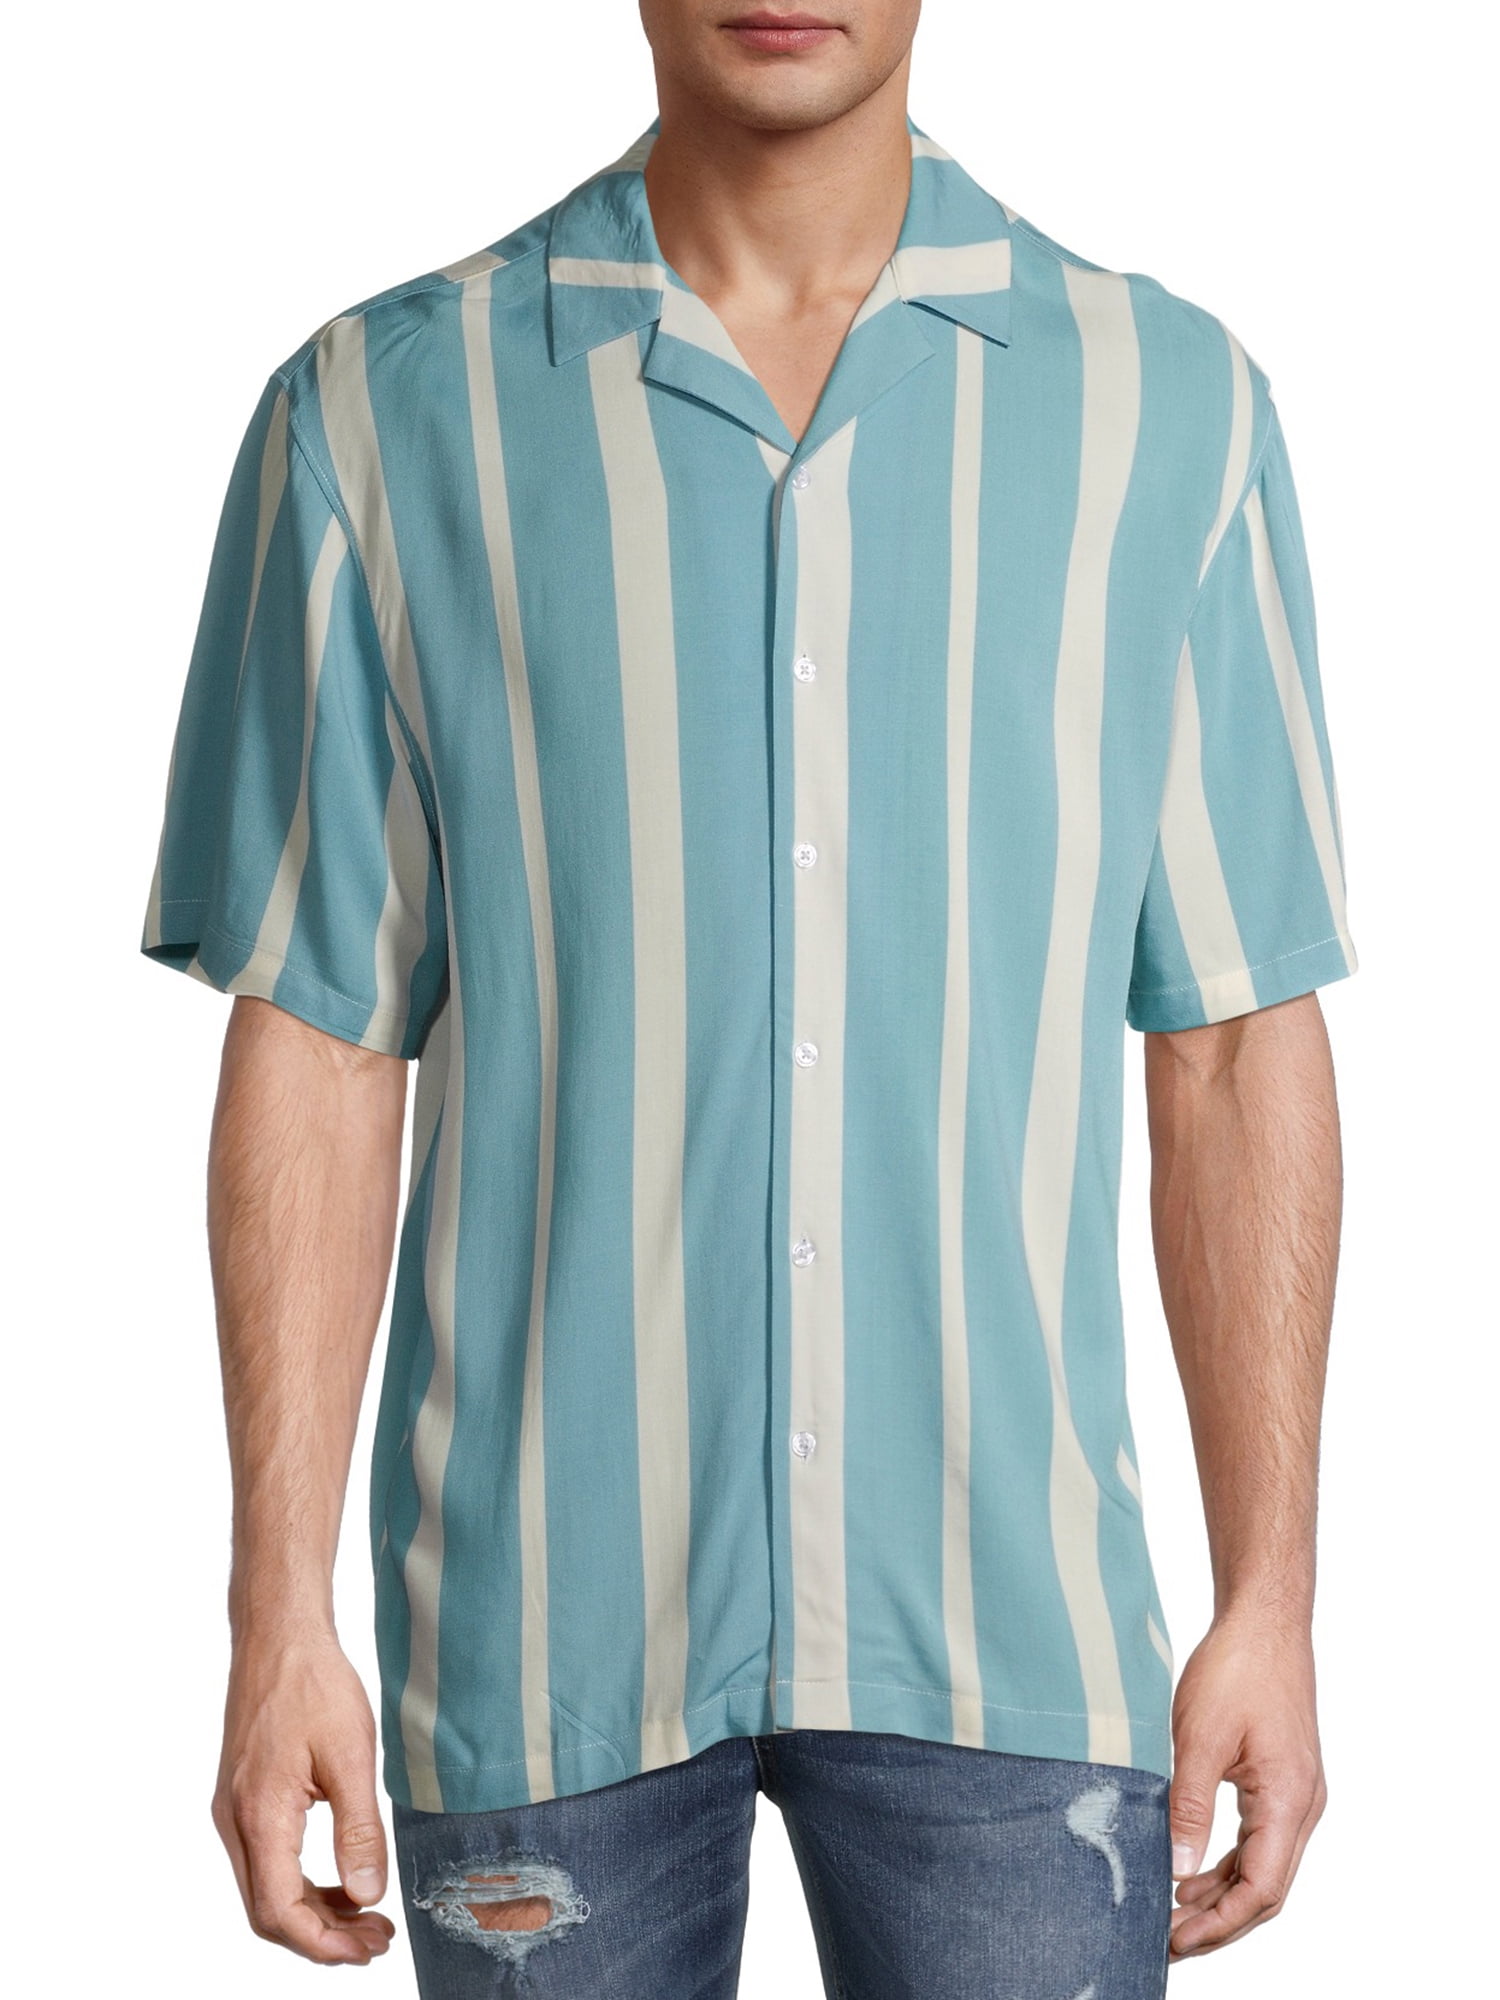 No Boundaries Men's Short Sleeve Printed Rayon Shirt - Walmart.com